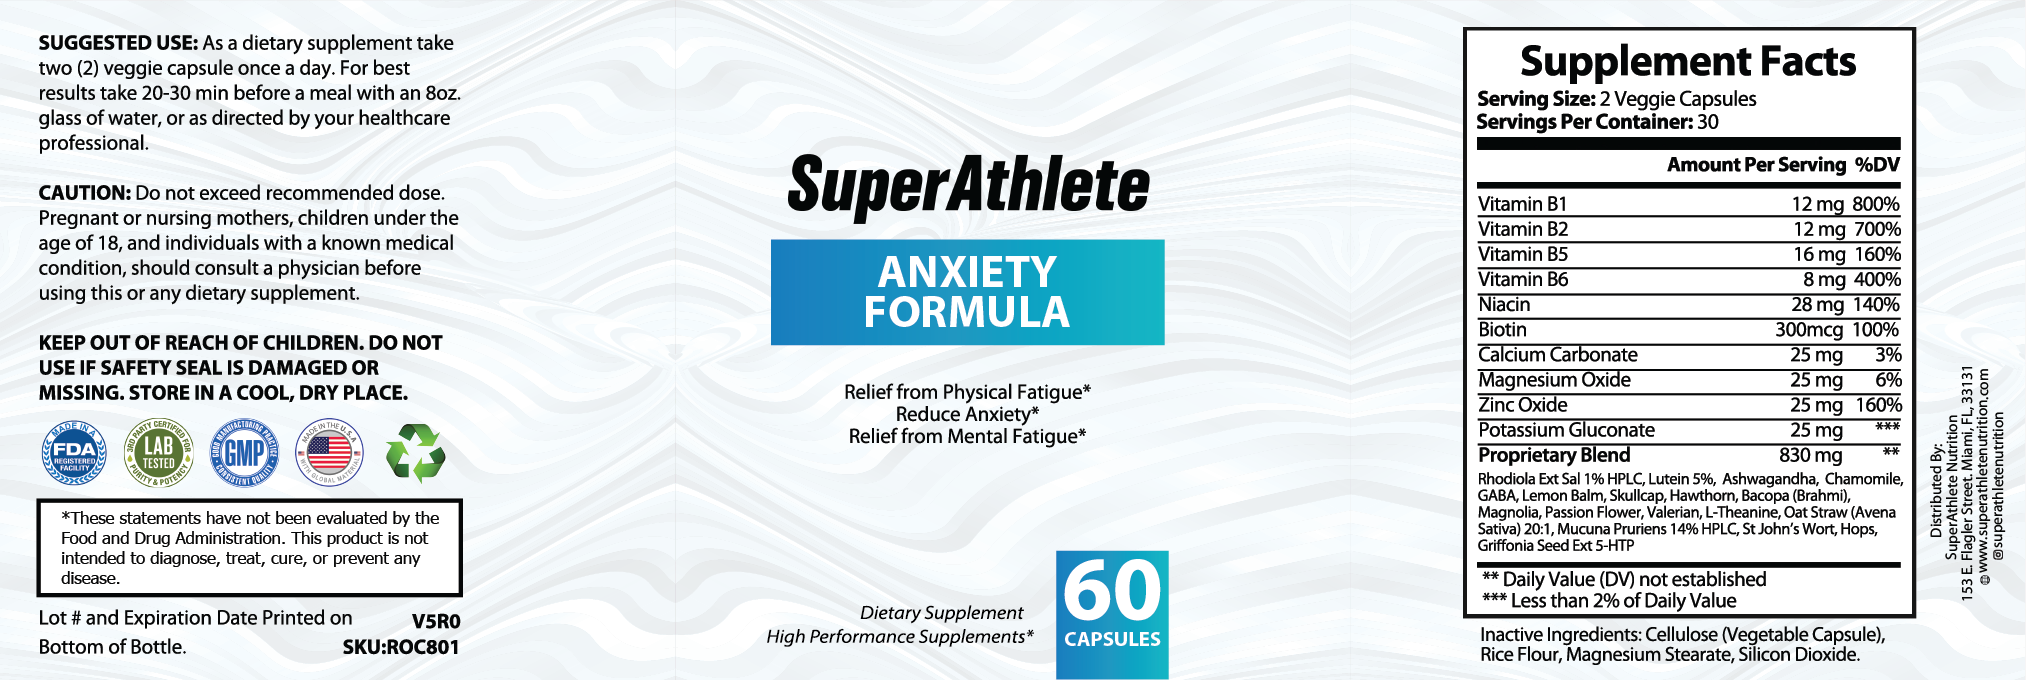 SuperAthlete Anxiety Formula